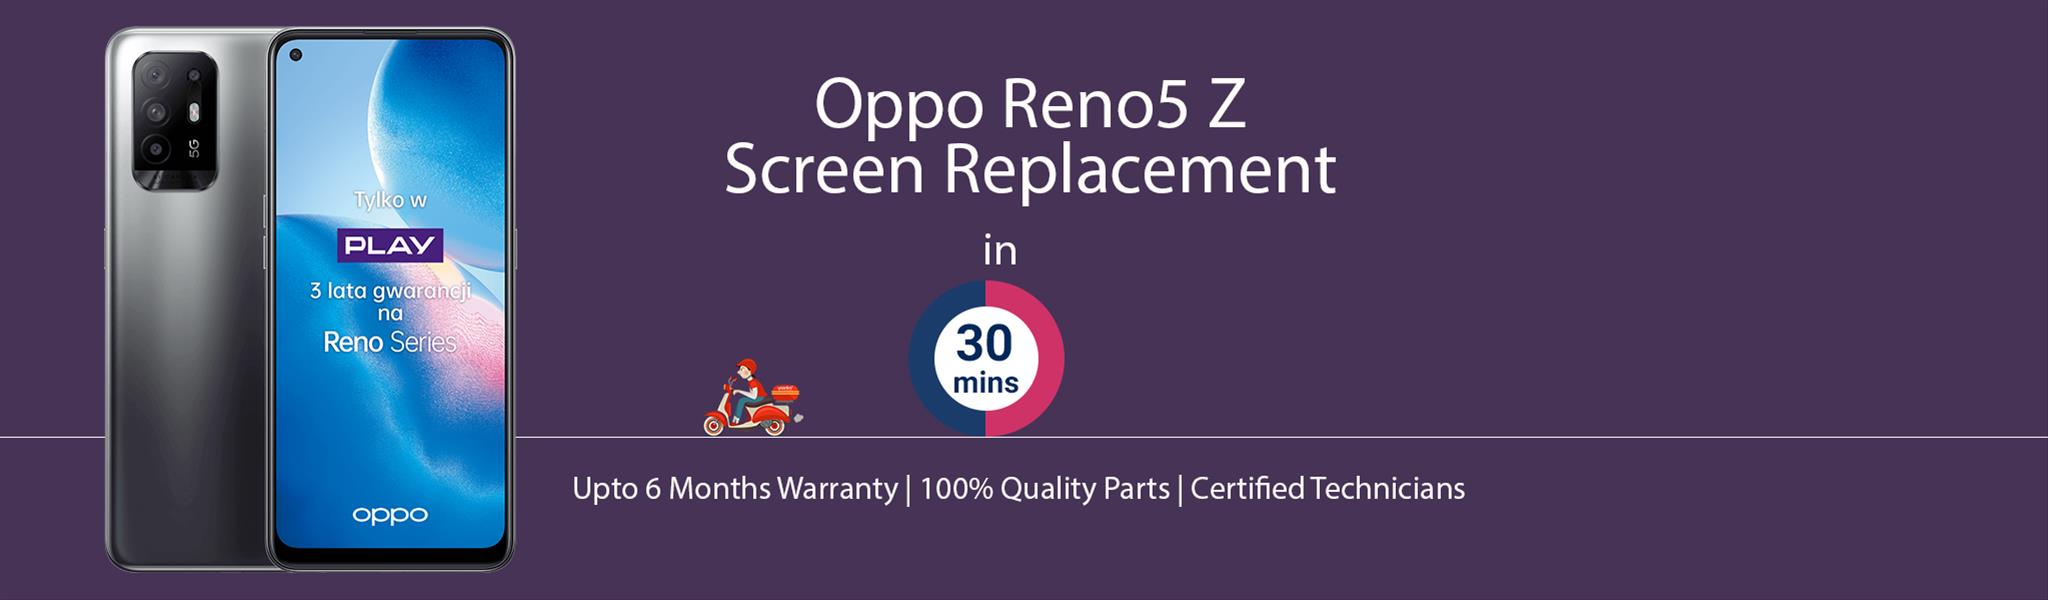 oppo-reno-5-z-screen-replacement.jpg